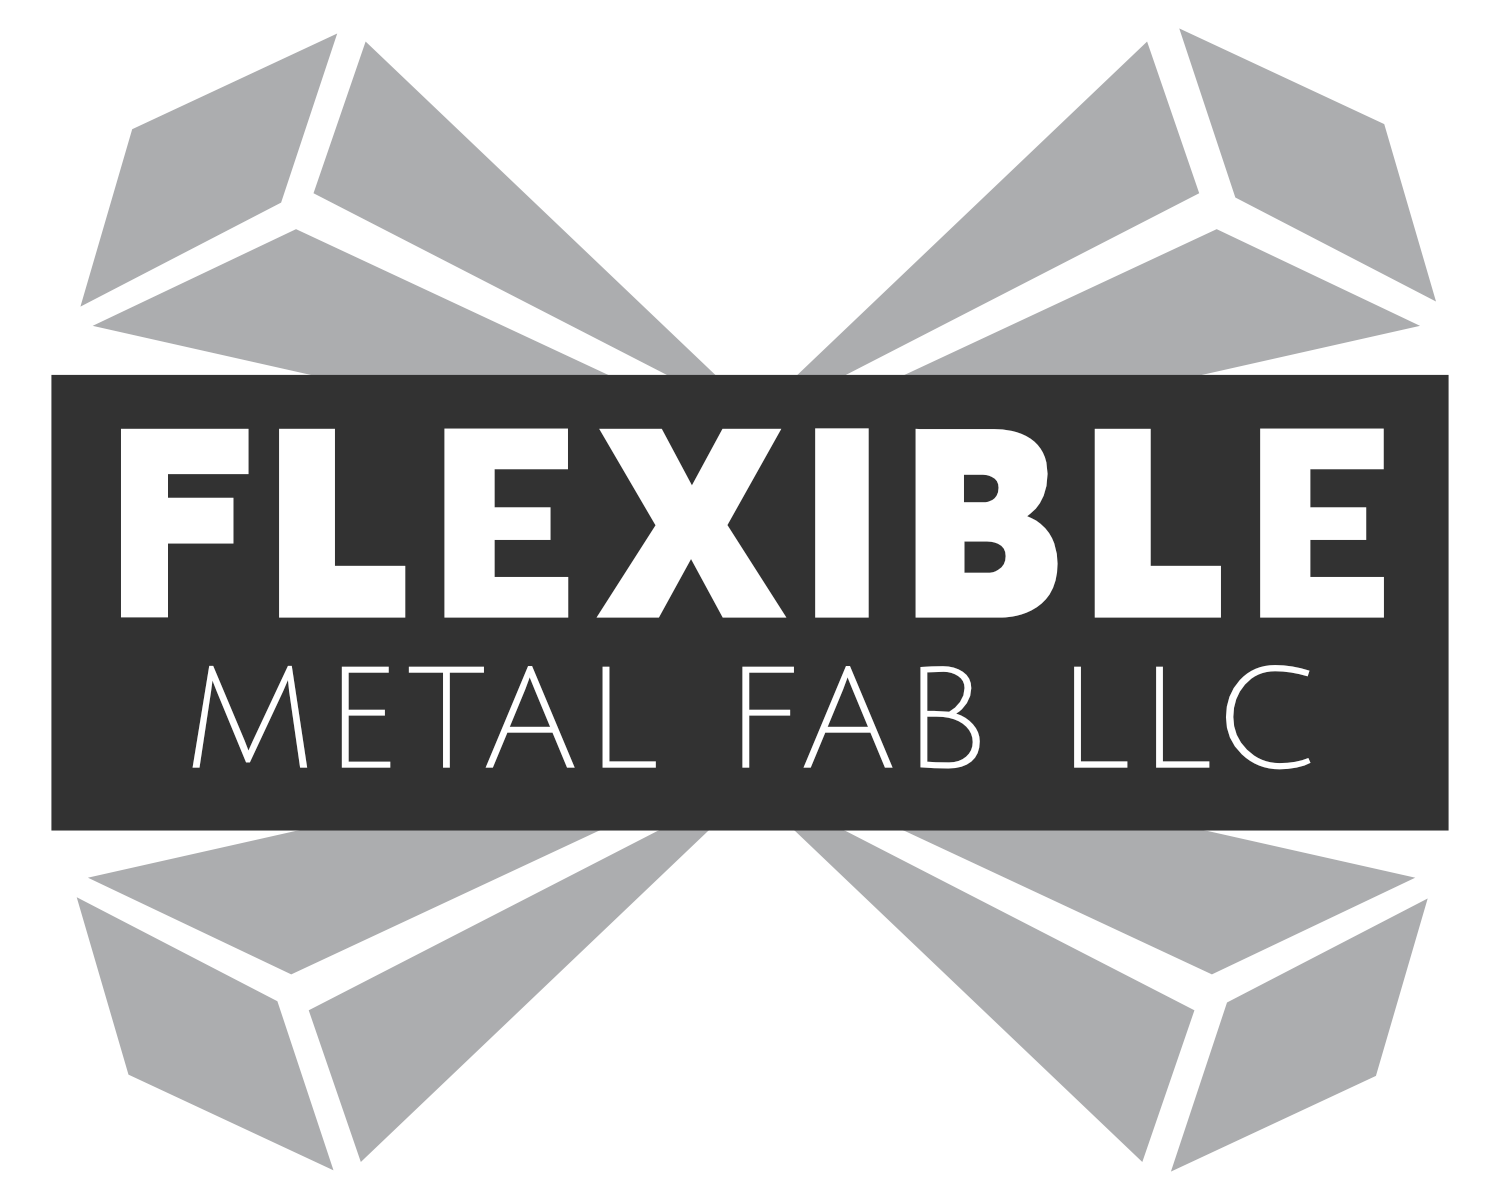 Flexible Metal Fab